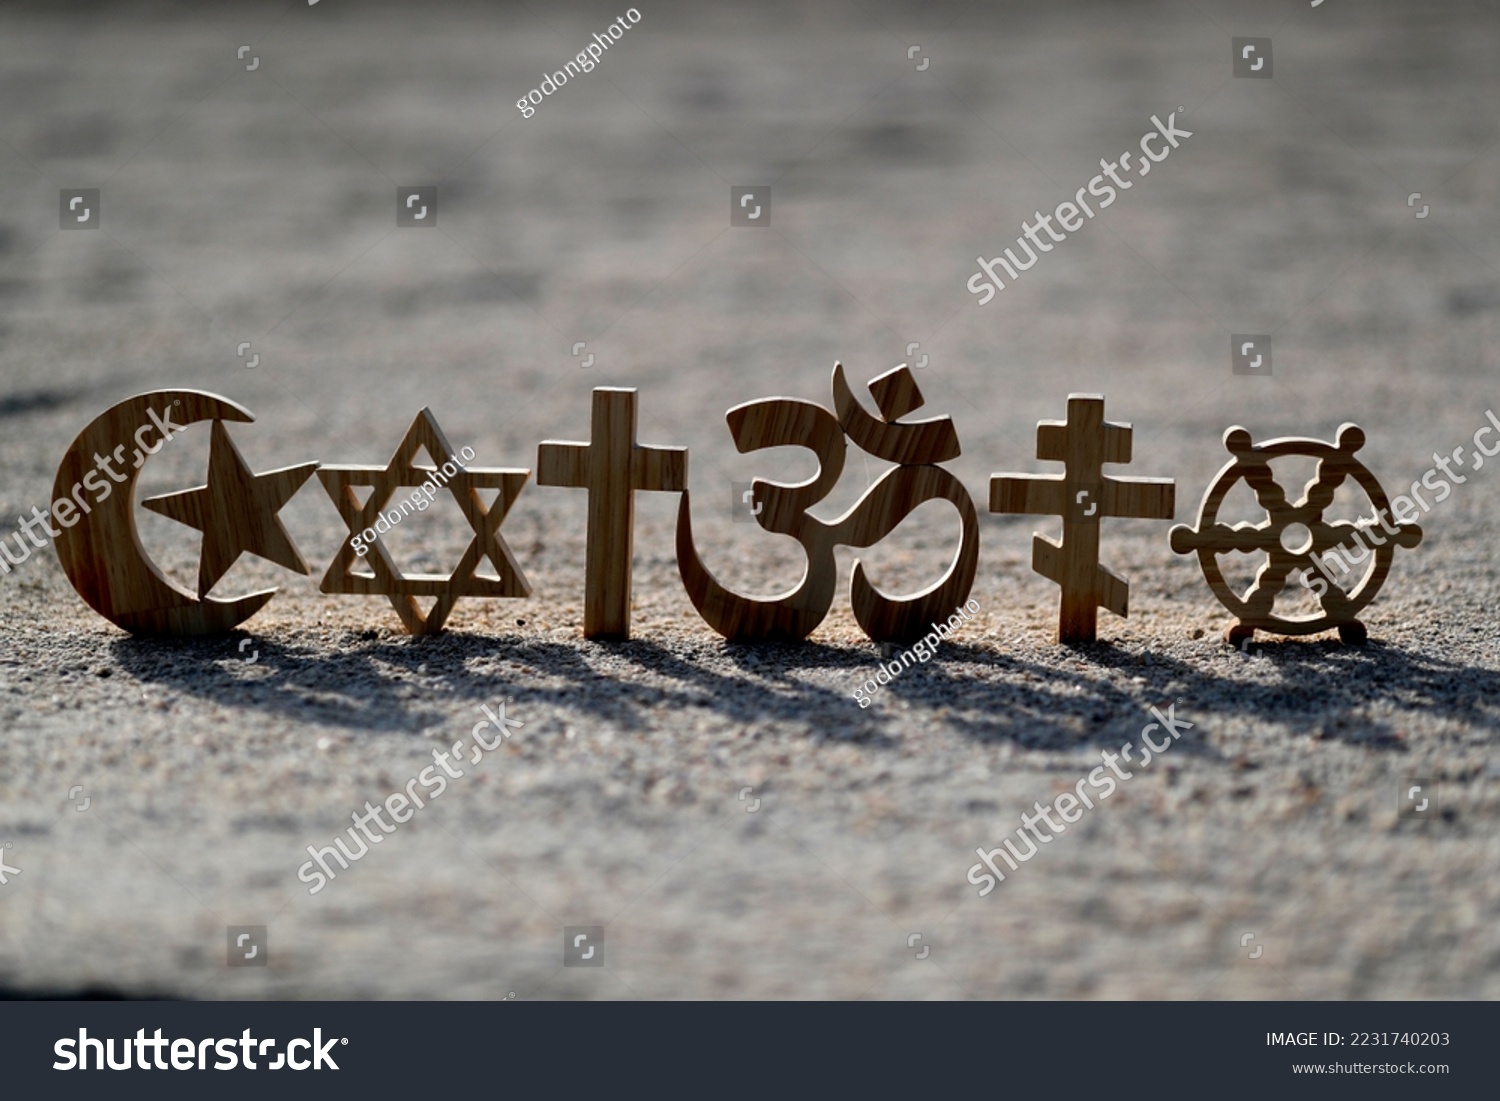 Religious symbols on sand. Christianity, Islam, Judaism, Orthodoxy Buddhism and Hinduism. Interreligious or interfaith concept.
 #2231740203